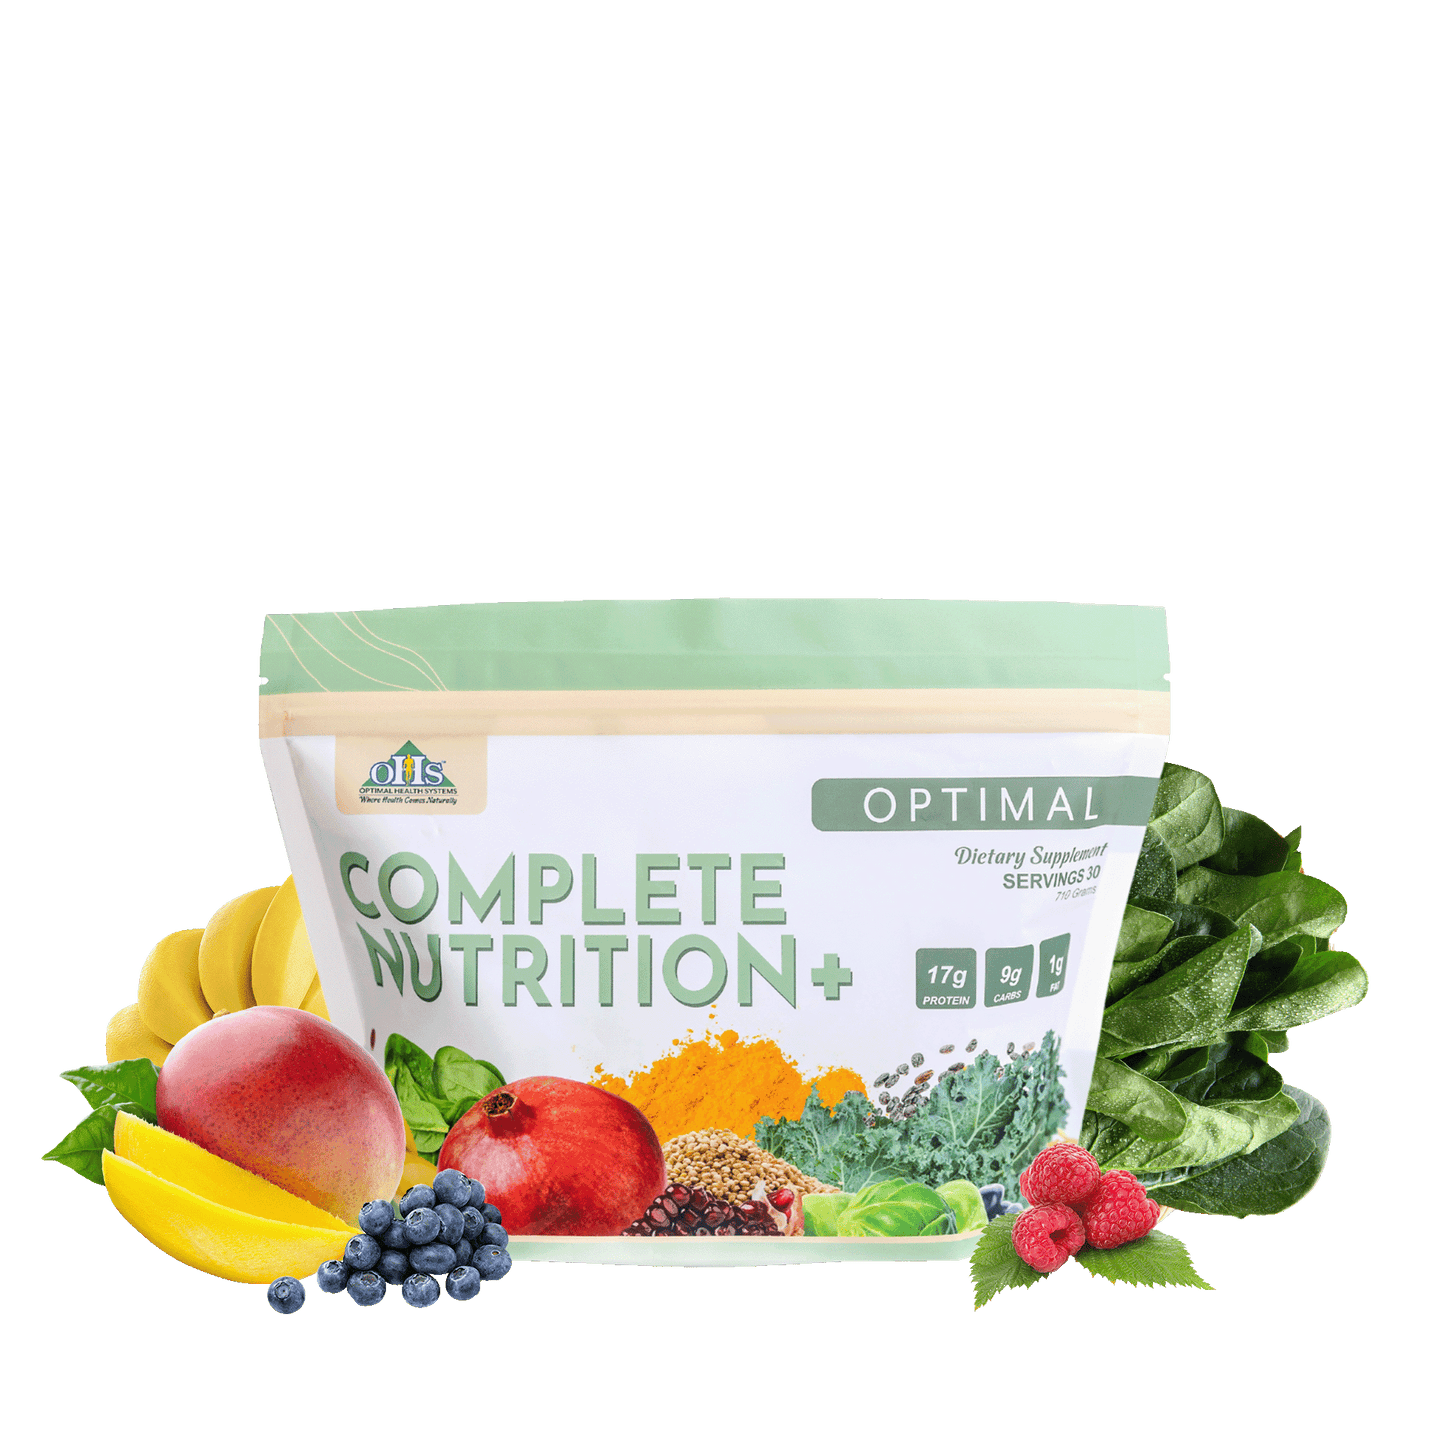 Optimal Complete Nutrition Plus